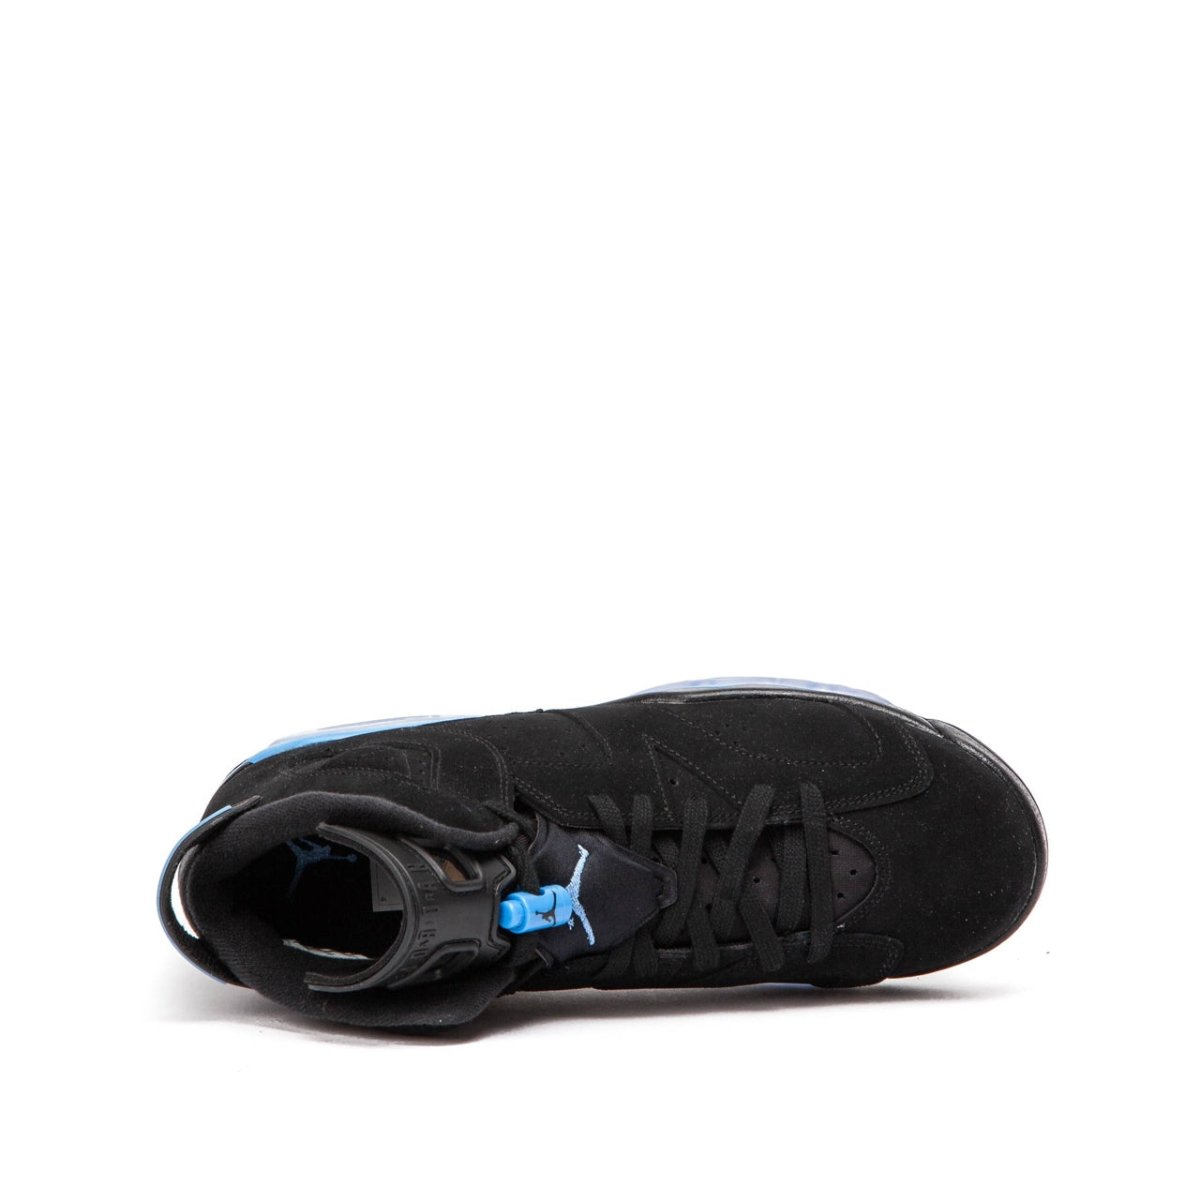 Nike Air Jordan 6 Retro BG (Schwarz / Blau)  - Allike Store